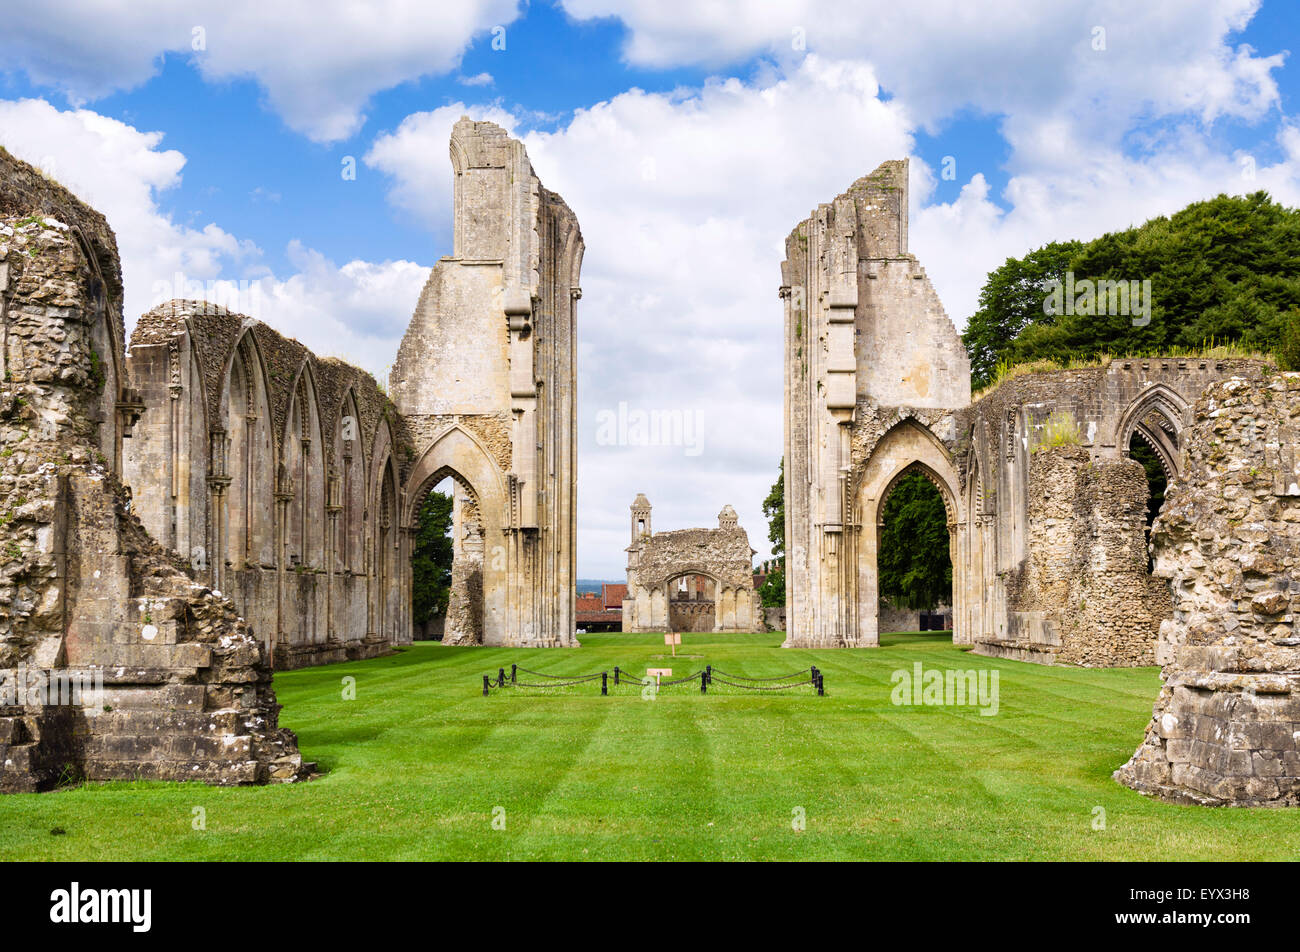 The ruins of Glastonbury Abbey, associated with the legend of King Arthur, Glastonbury, Somerset, England, UK Stock Photo